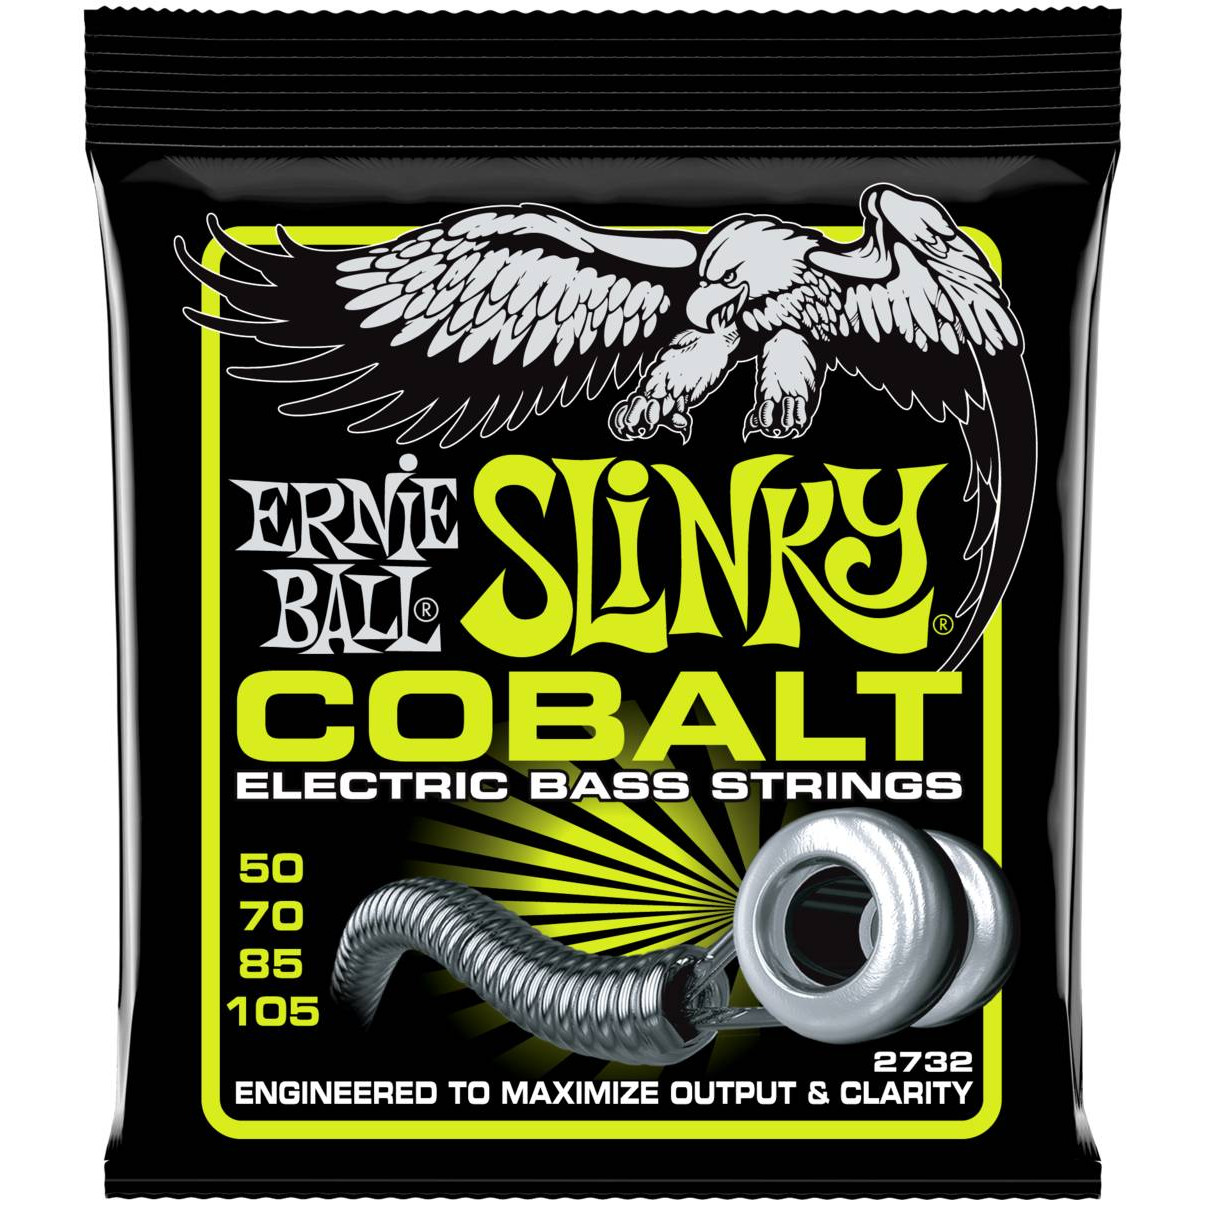 Струны Ernie Ball 2732 Slinky Cobalt Regular струны ernie ball 2816 slinky cobalt flatwound regular